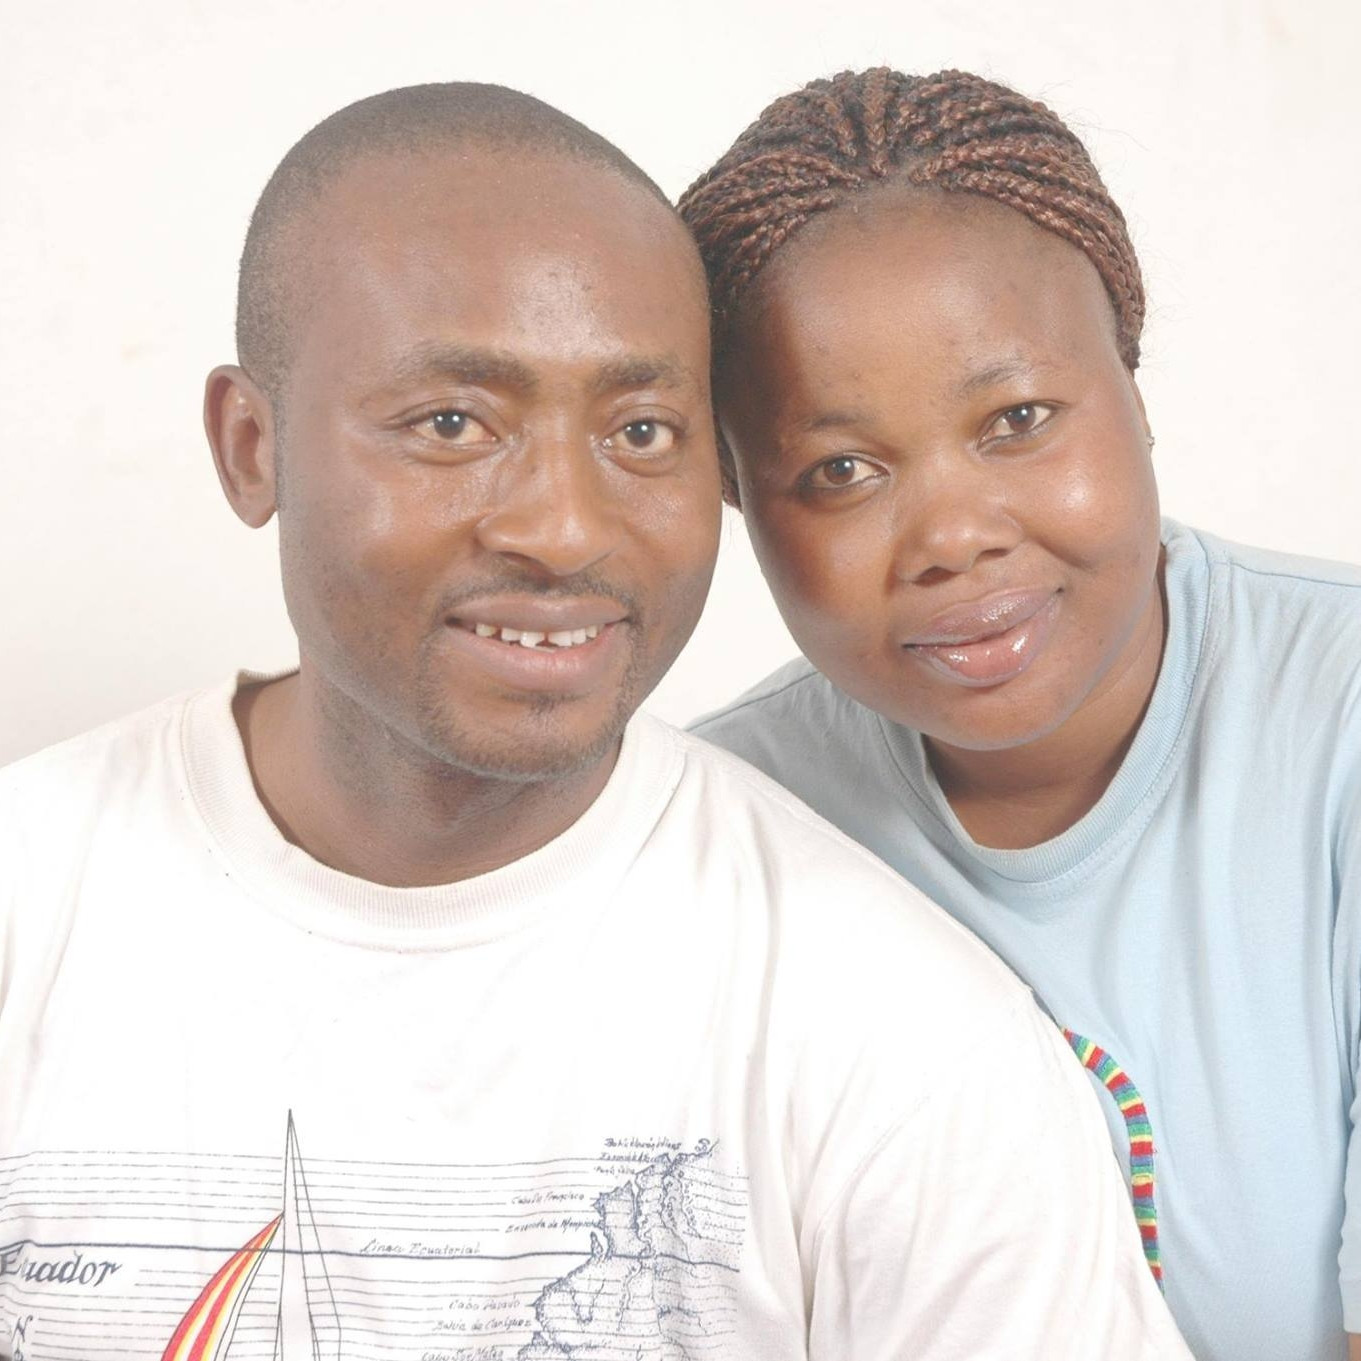  Nigerian couple welcome